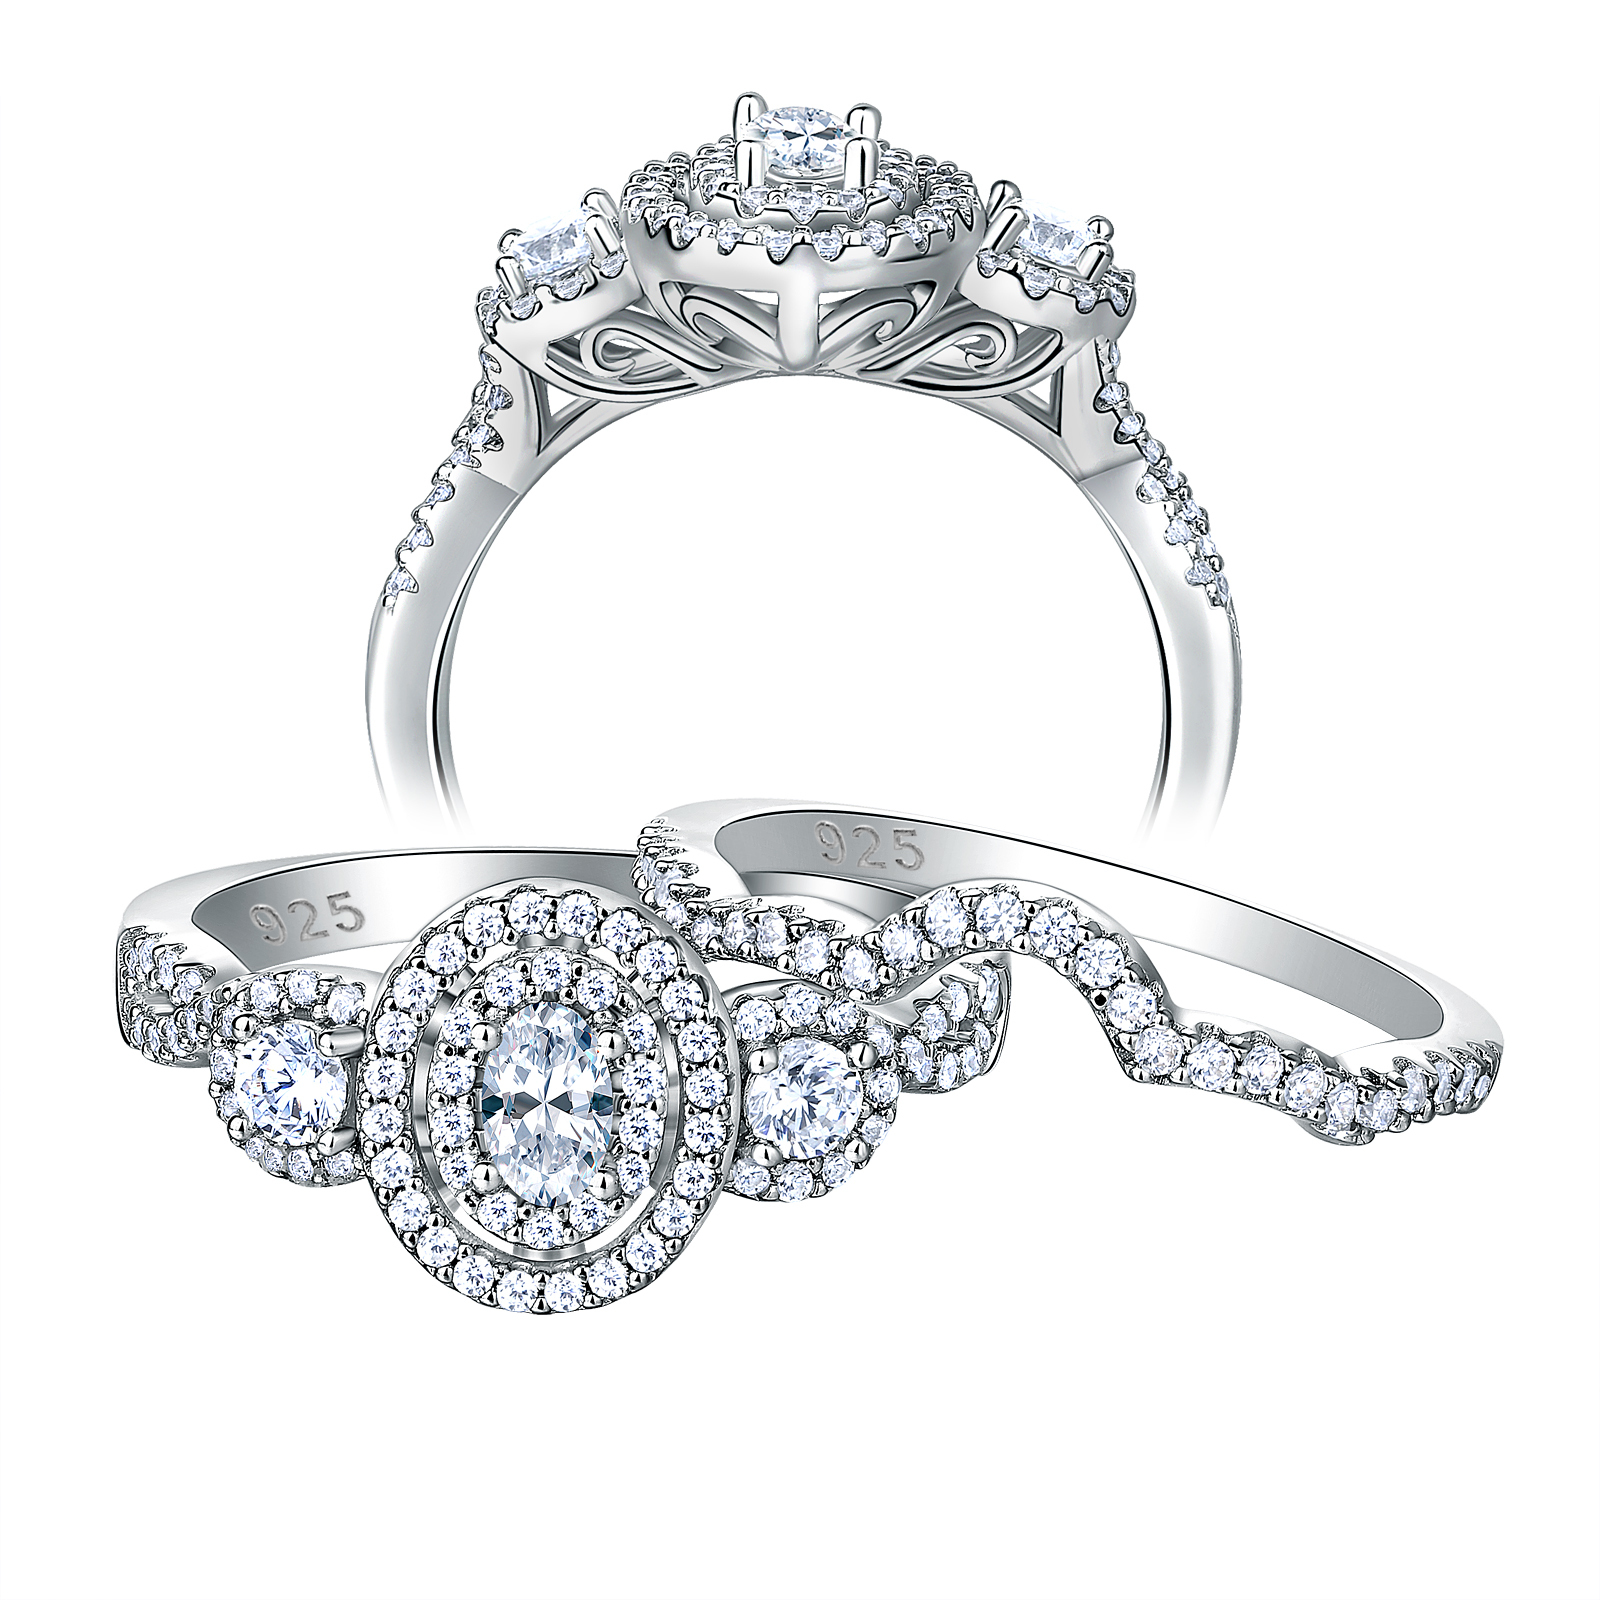 Sterling Silver Princess Cut CZ Engagement Ring Wedding Band Set Sizes 5-10